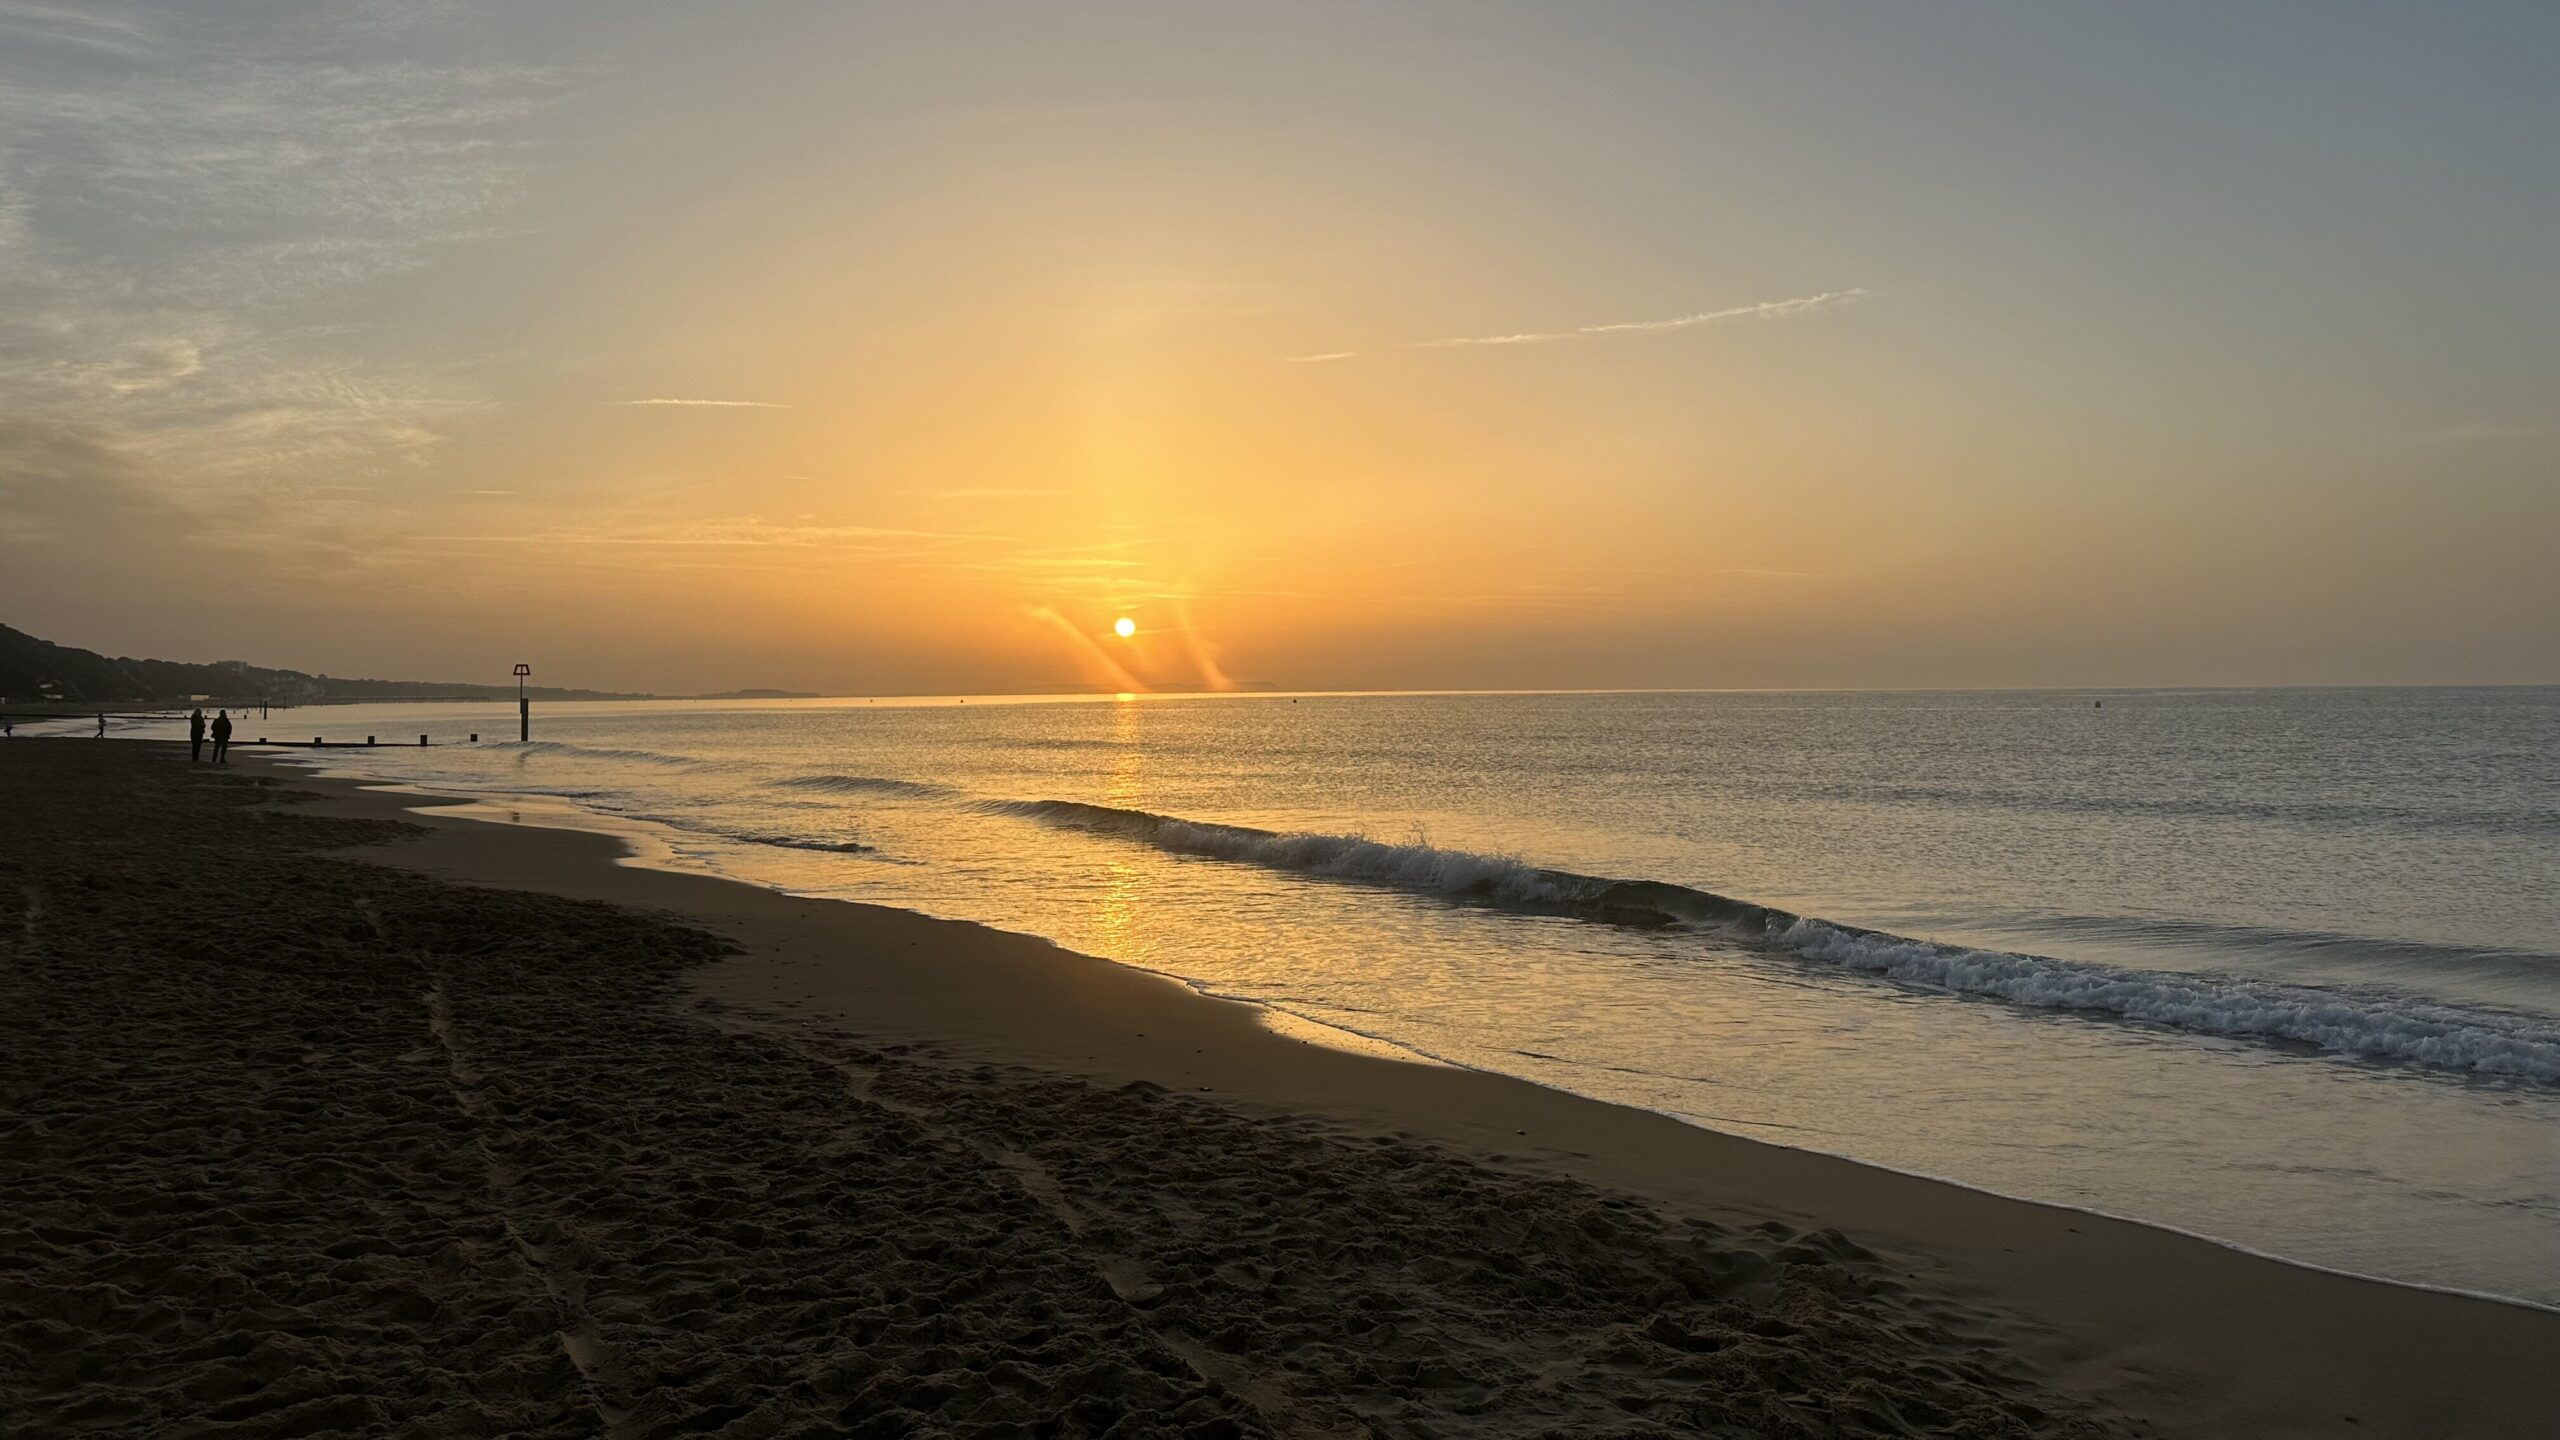 Sunrise over the sea at Bournemouth beach